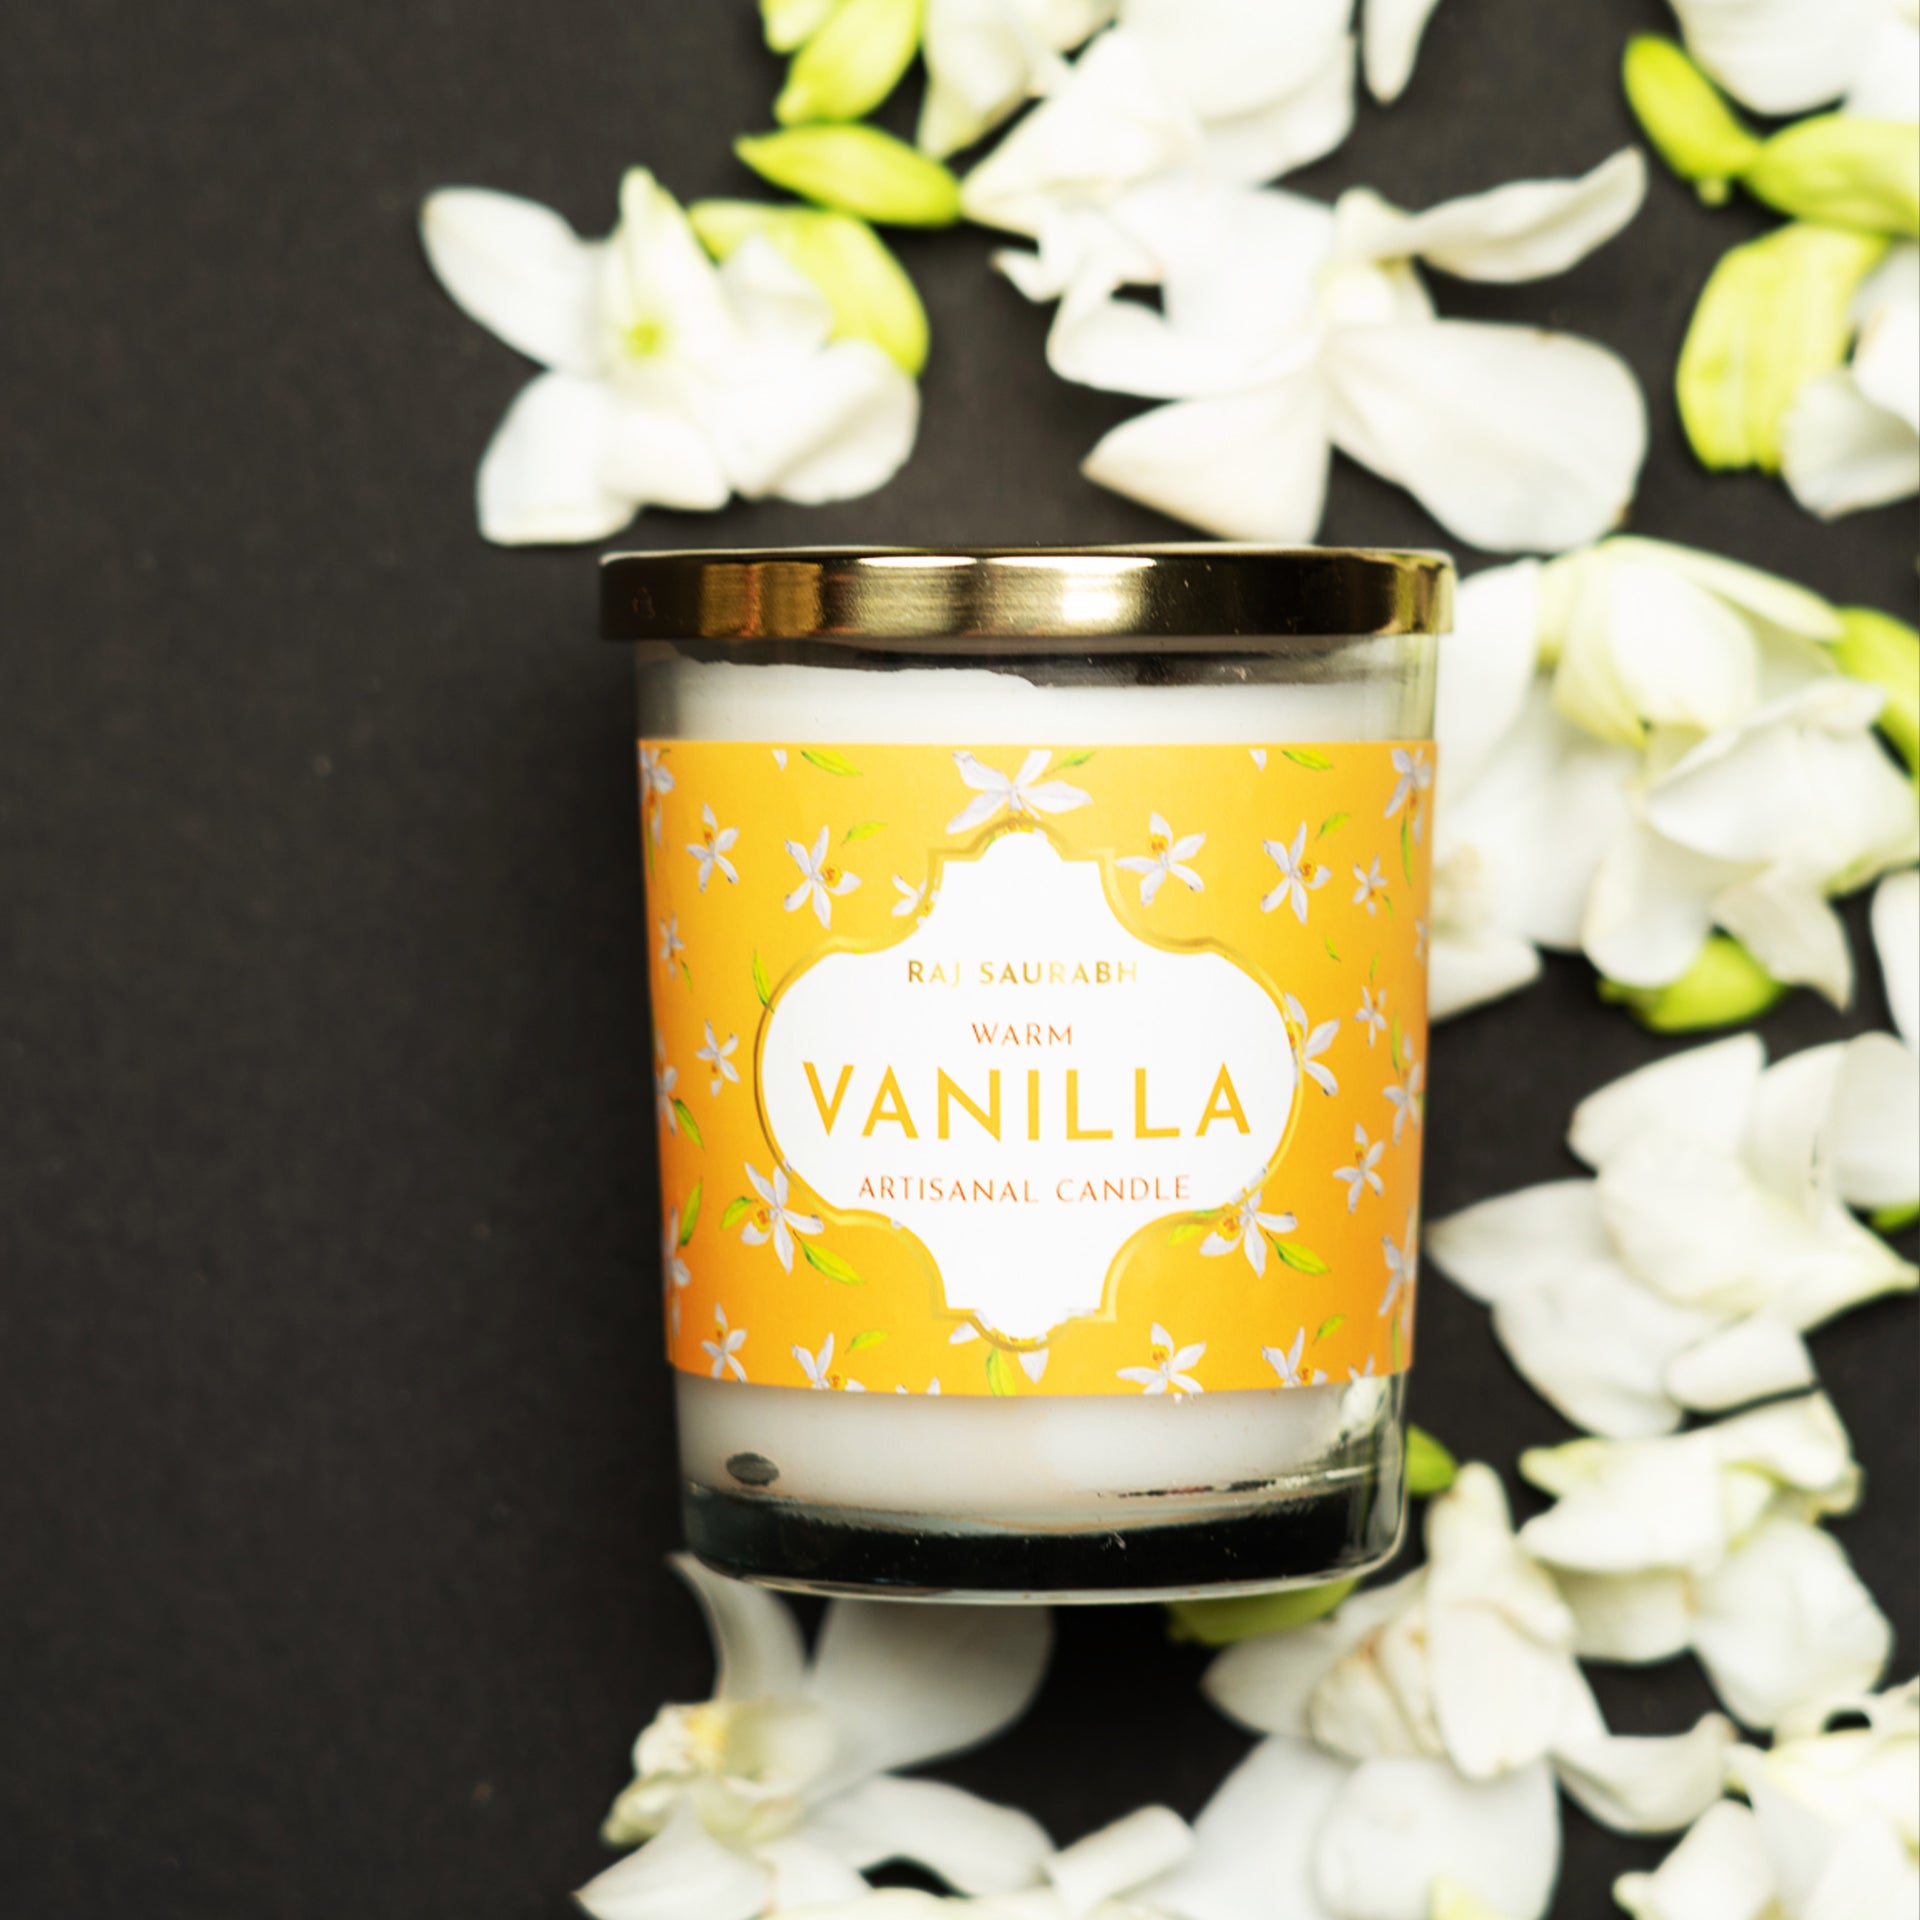 Warm Vanilla Artisanal Candle